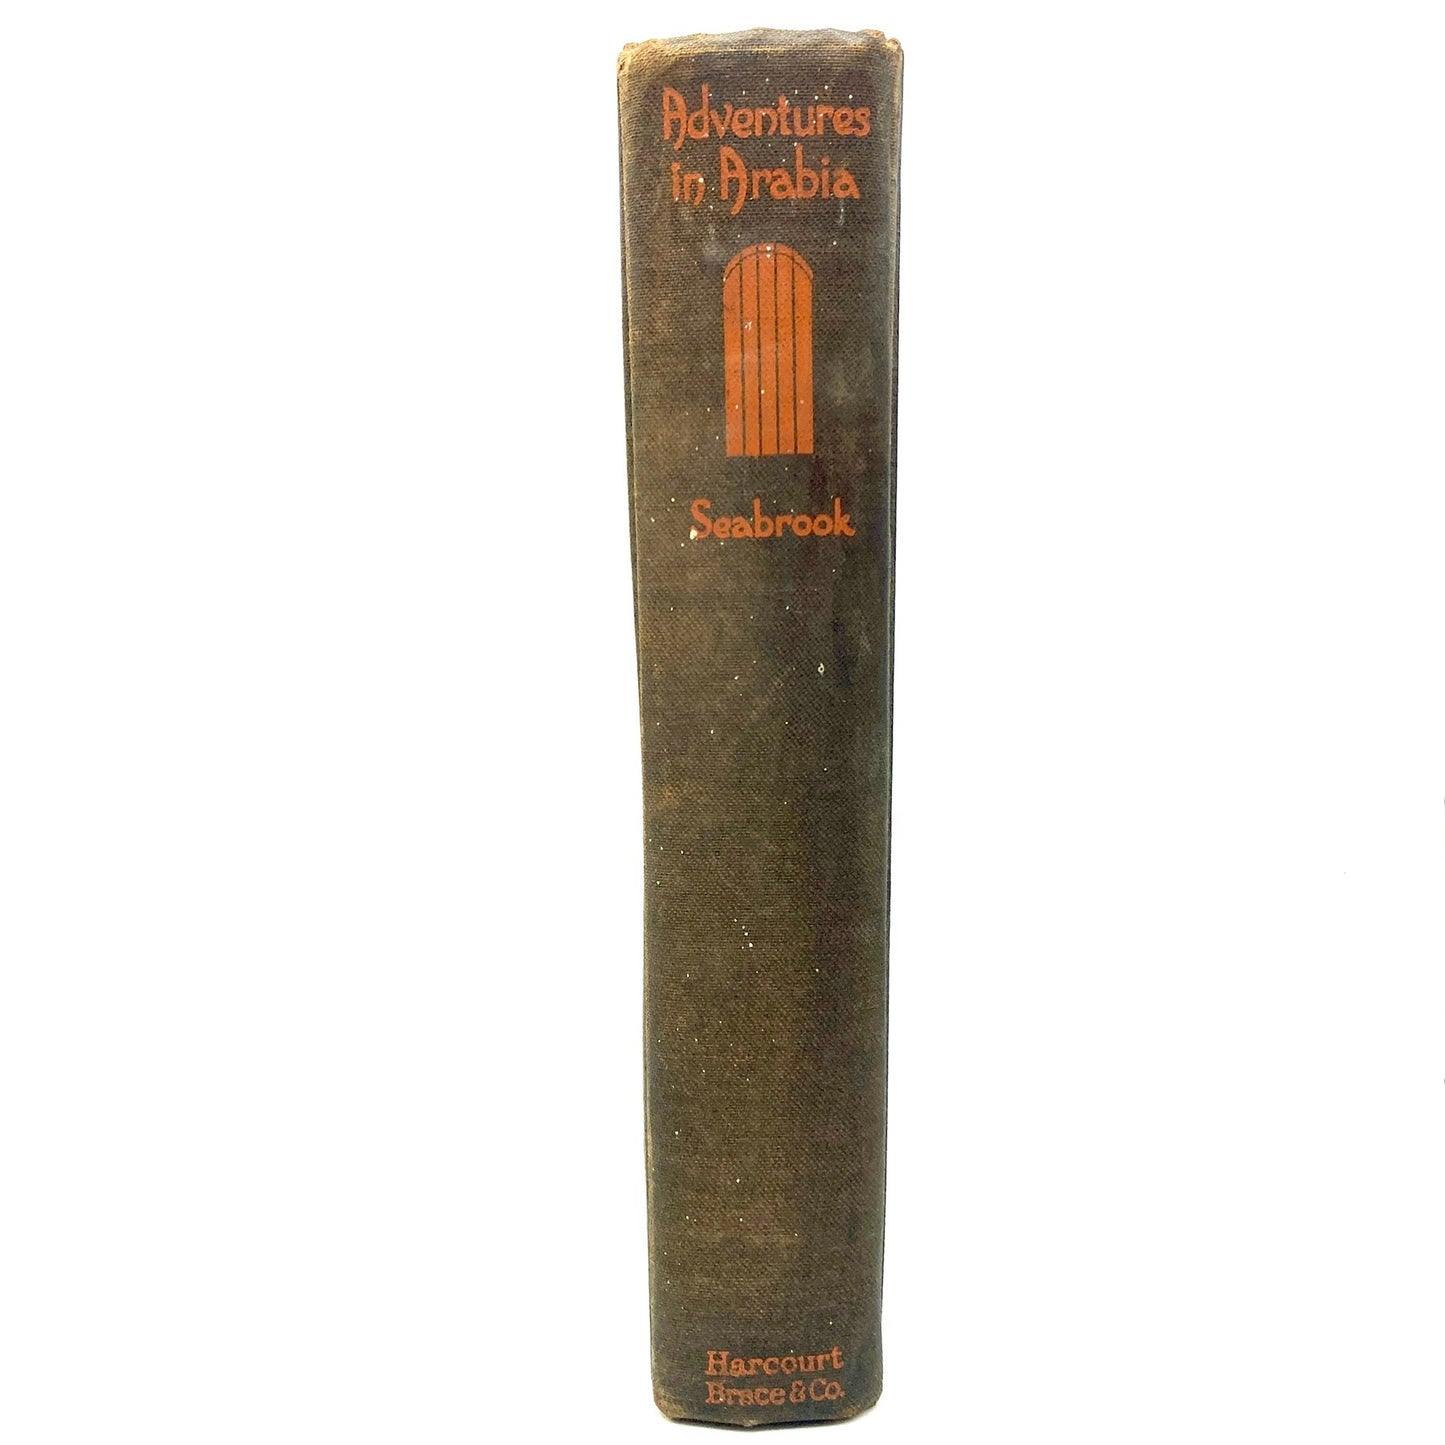 SEABROOK, W.B. "Adventures in Arabia" [Harcourt, Brace & Co, 1927] - Buzz Bookstore